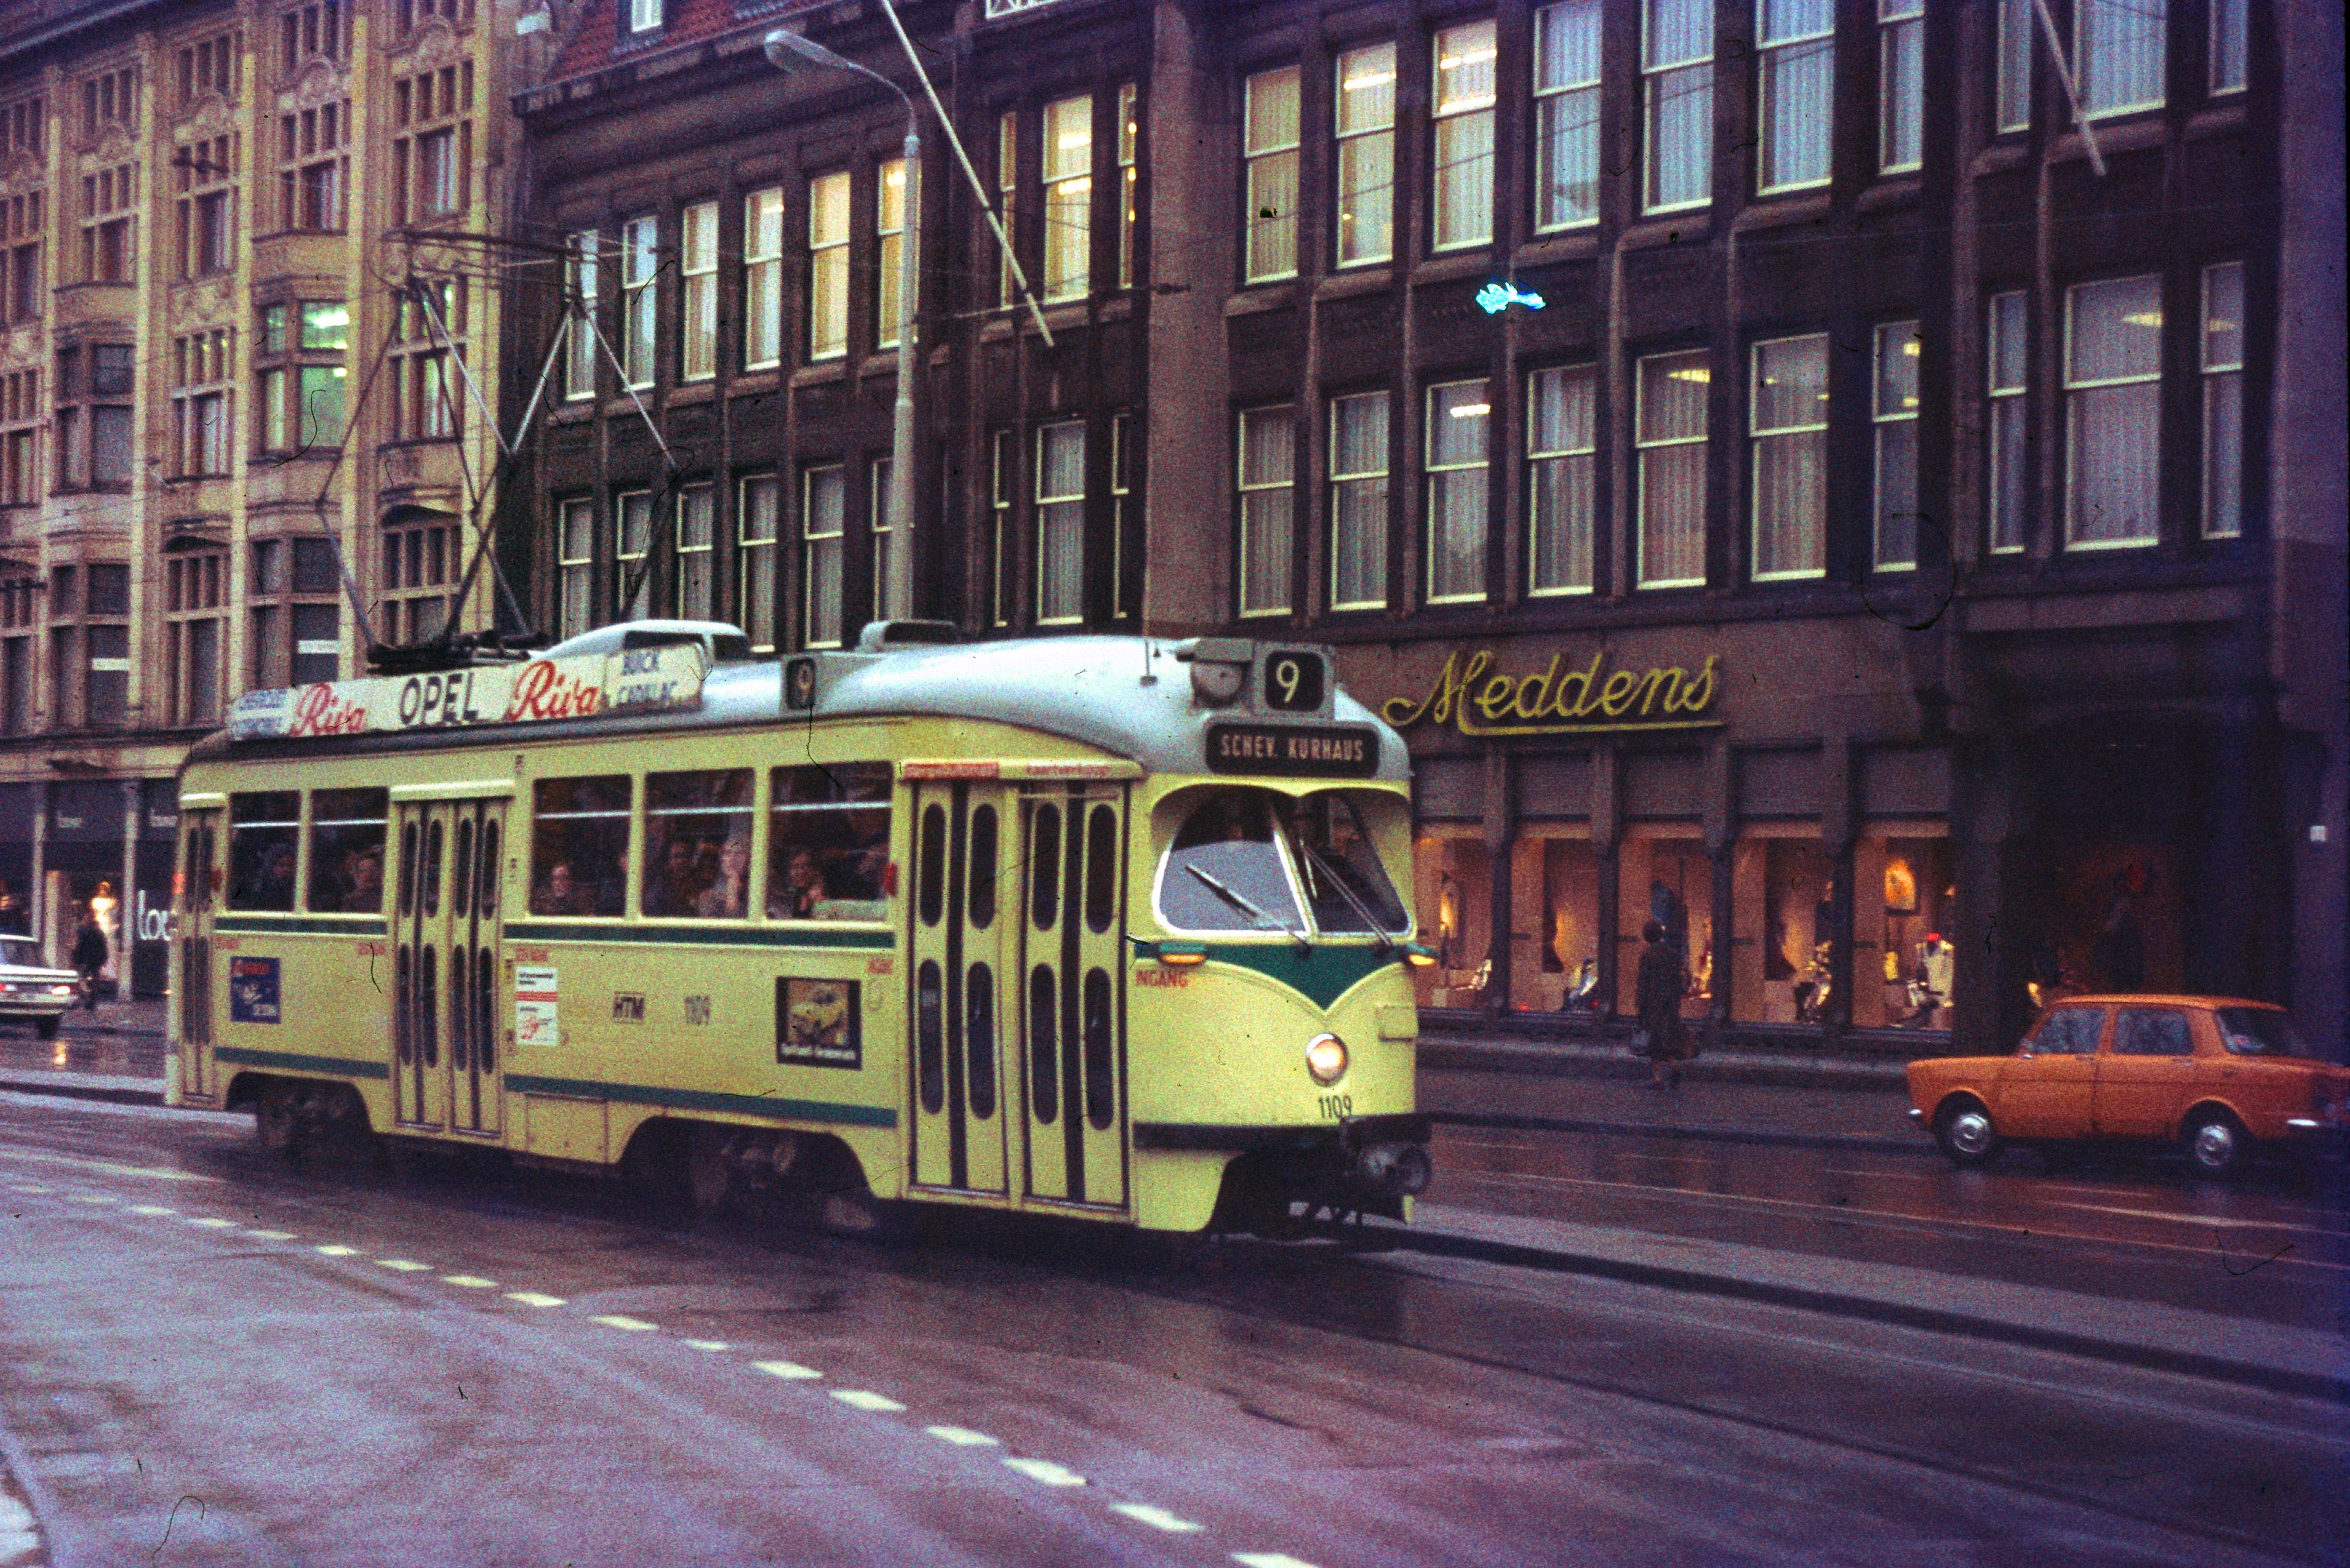 Hague PCC tram